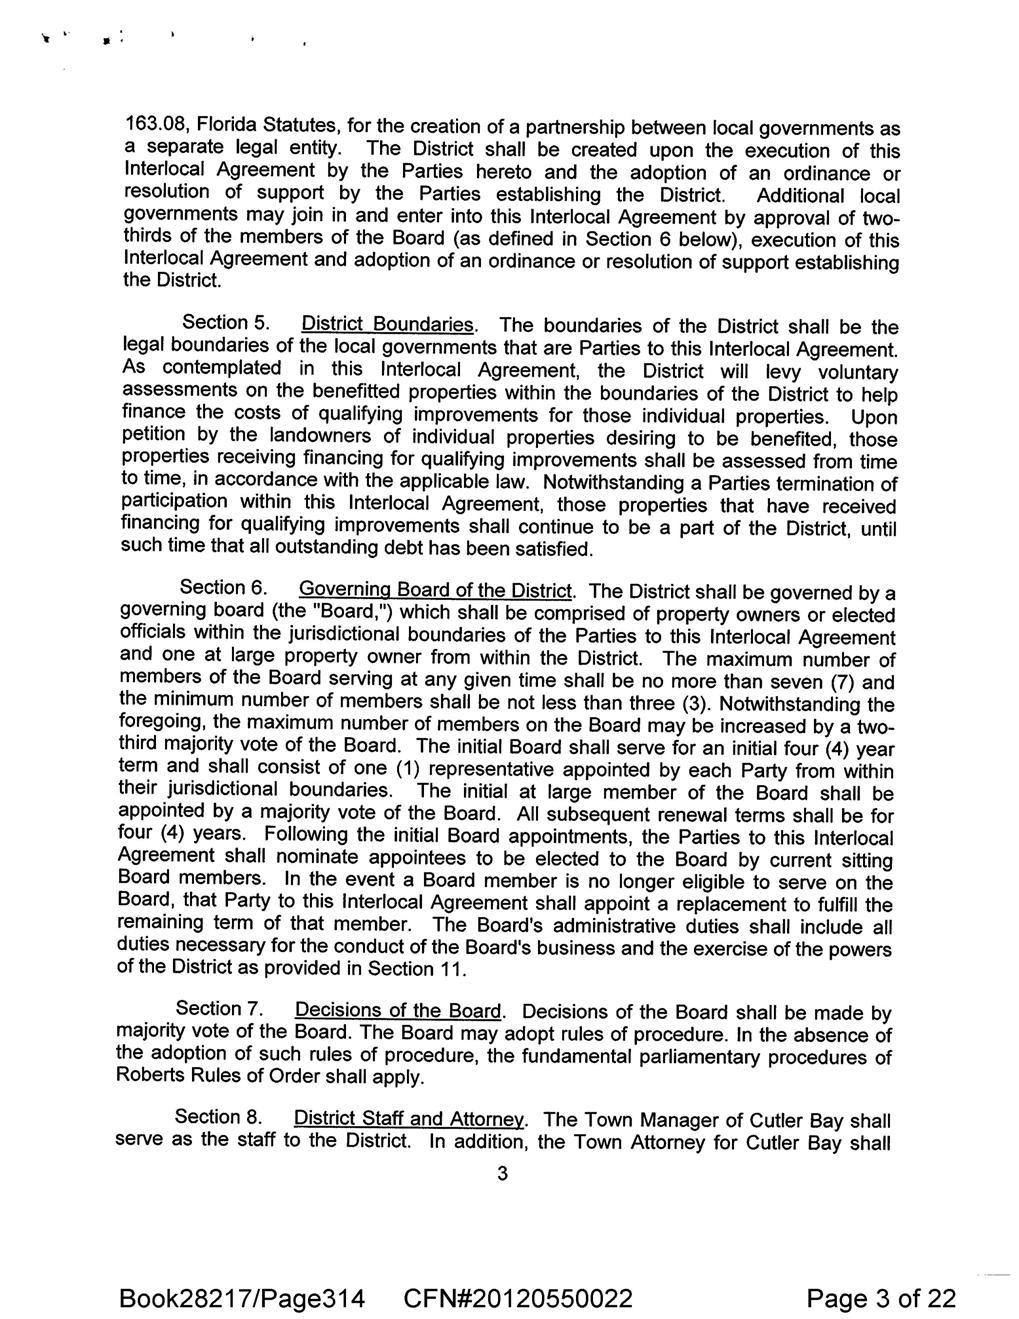 Miami-Dade Official Records - Print Document https://www2.miami-dadeclerk.